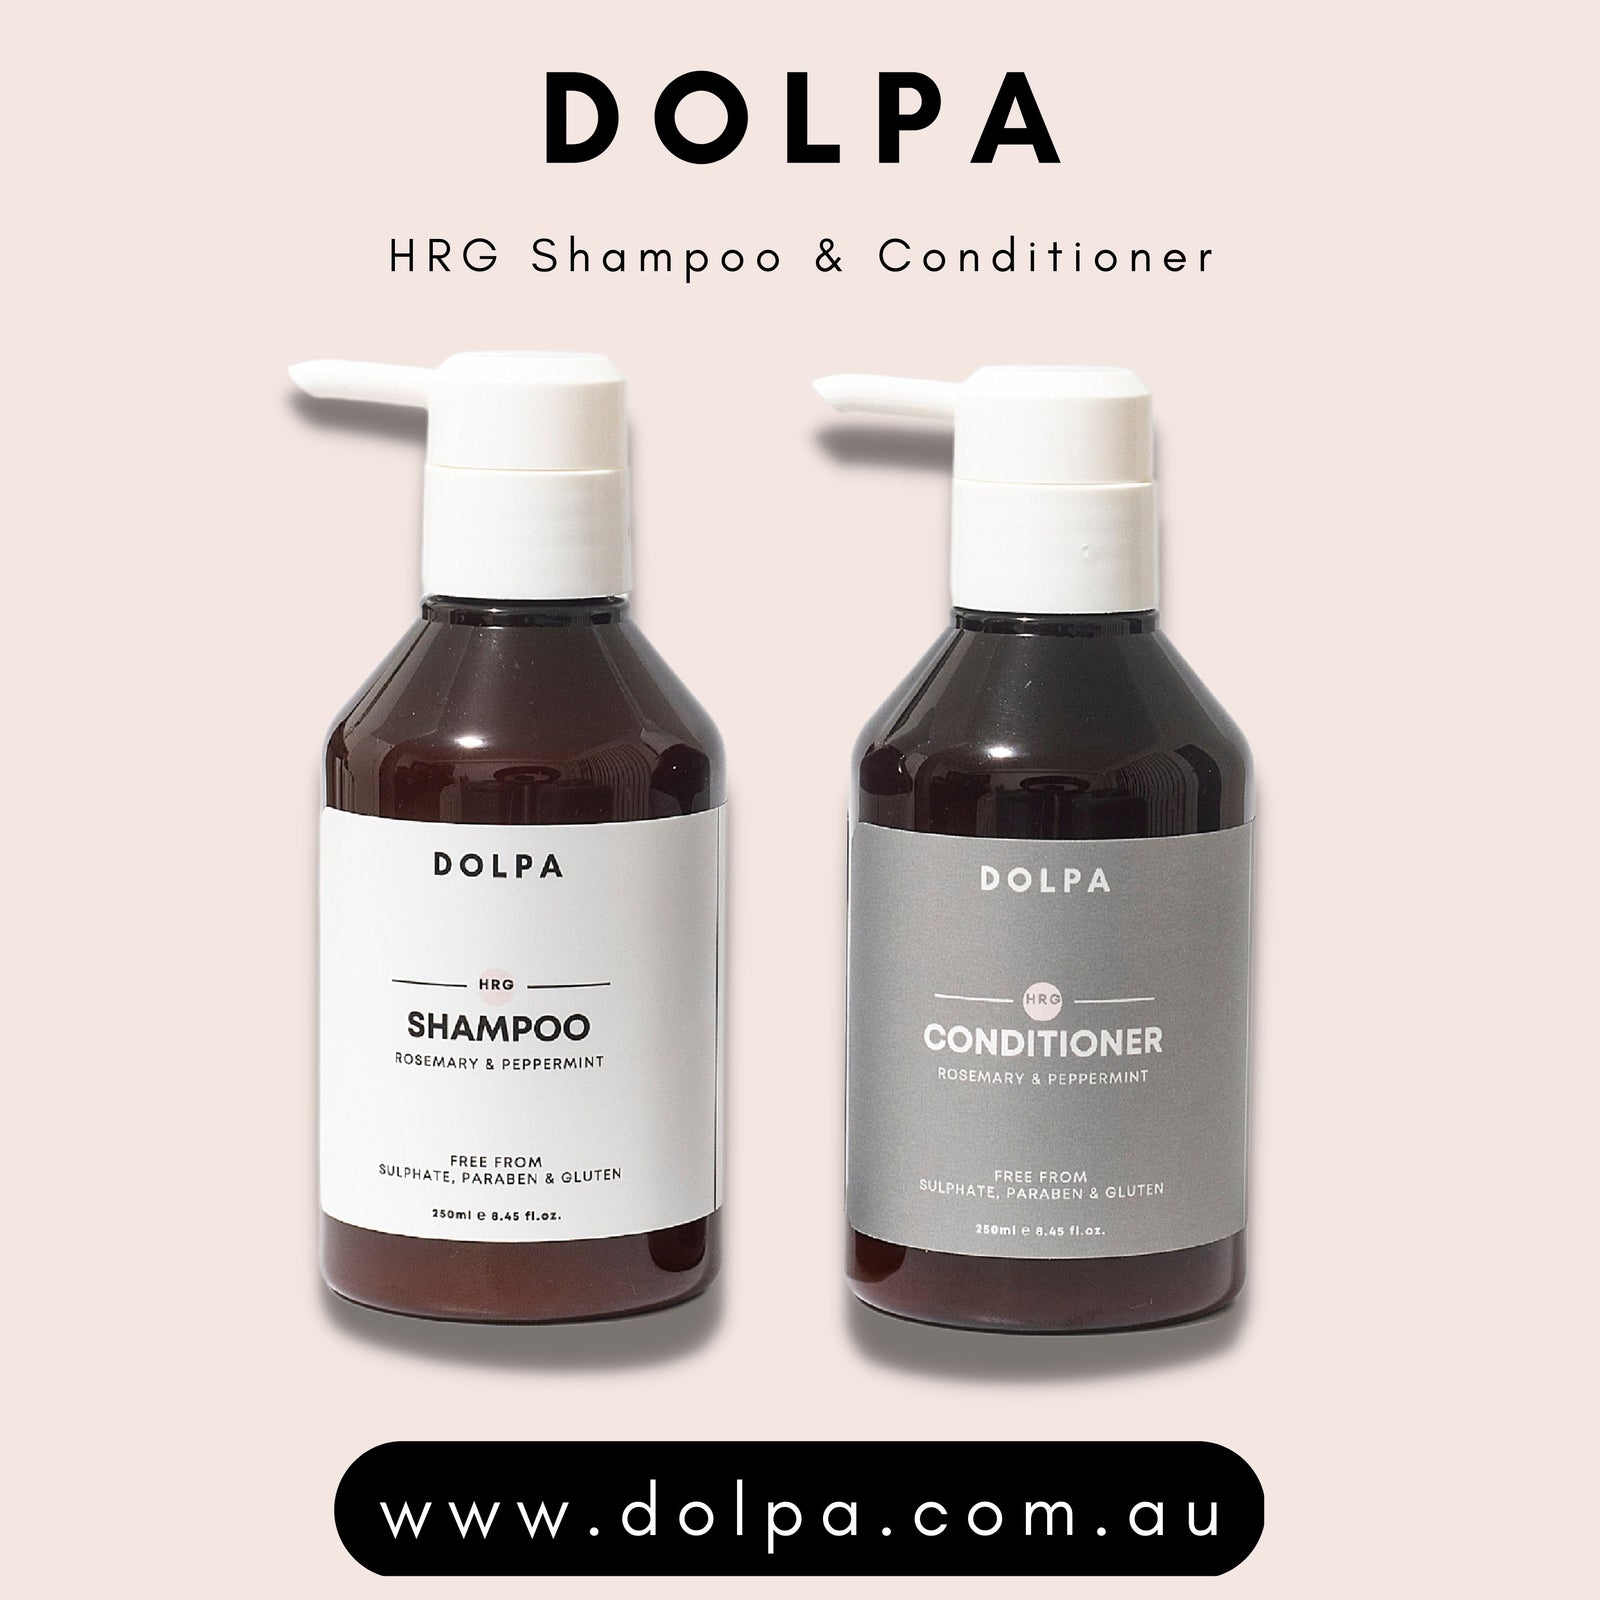 DOLPA Shampoo and Conditioner. Say Goodbye to Hair Loss with DOLPA HRG.